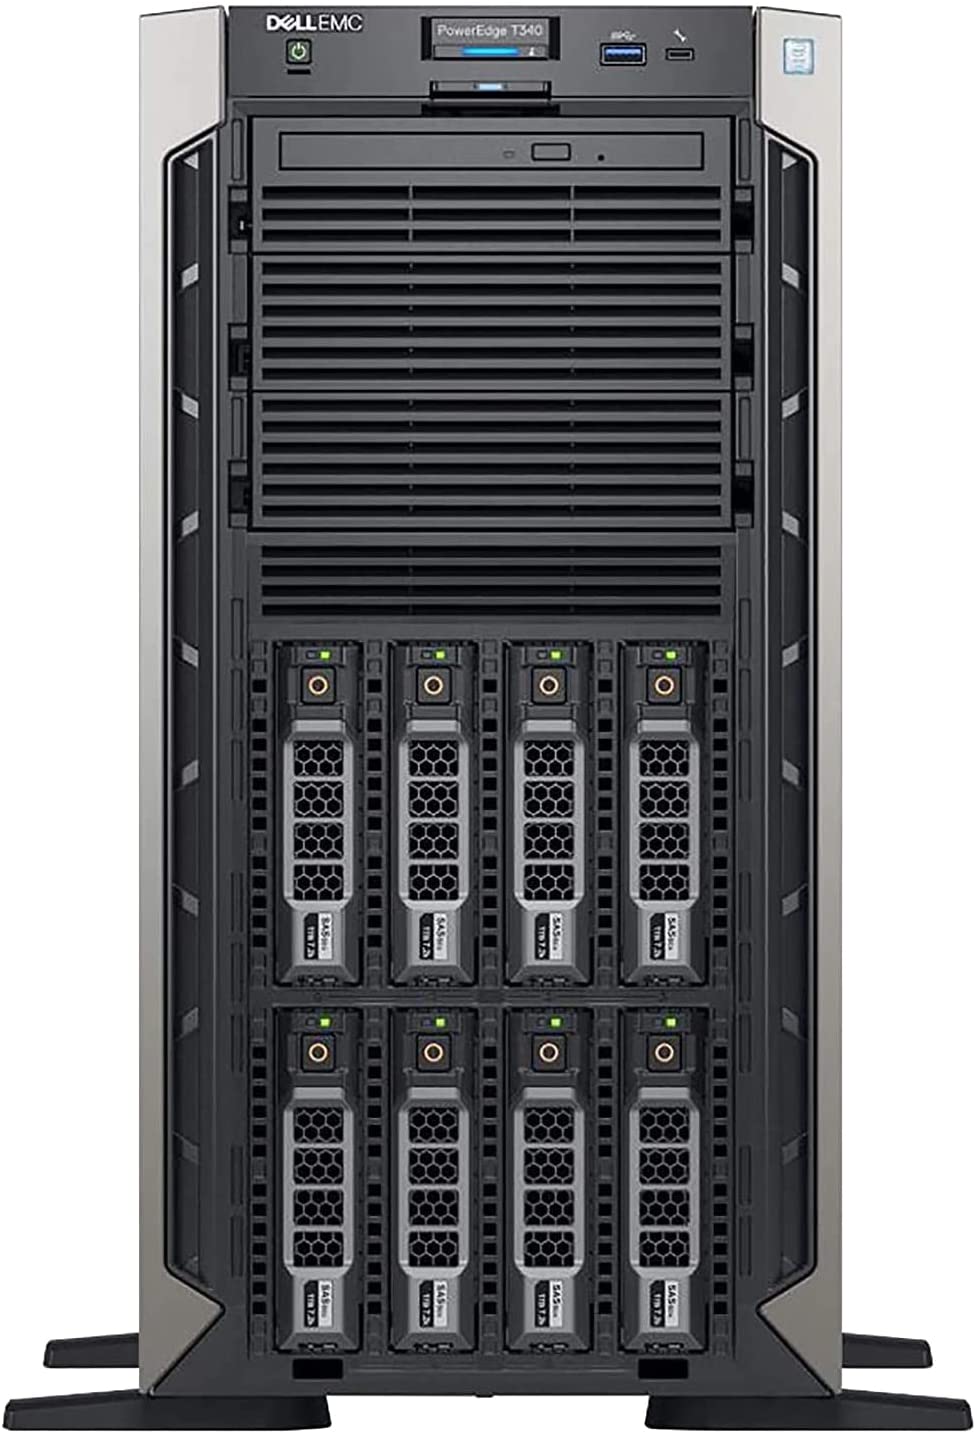 Dell PowerEdge Server T340 Tower Intel Xeon E2124, 8GB Ram, 2TB Hard Drive, PERC H330 RAID, DVD+/-RW ROM, iDrac9, Express, Single, Hot-plug Power Supply 1+0, 495W